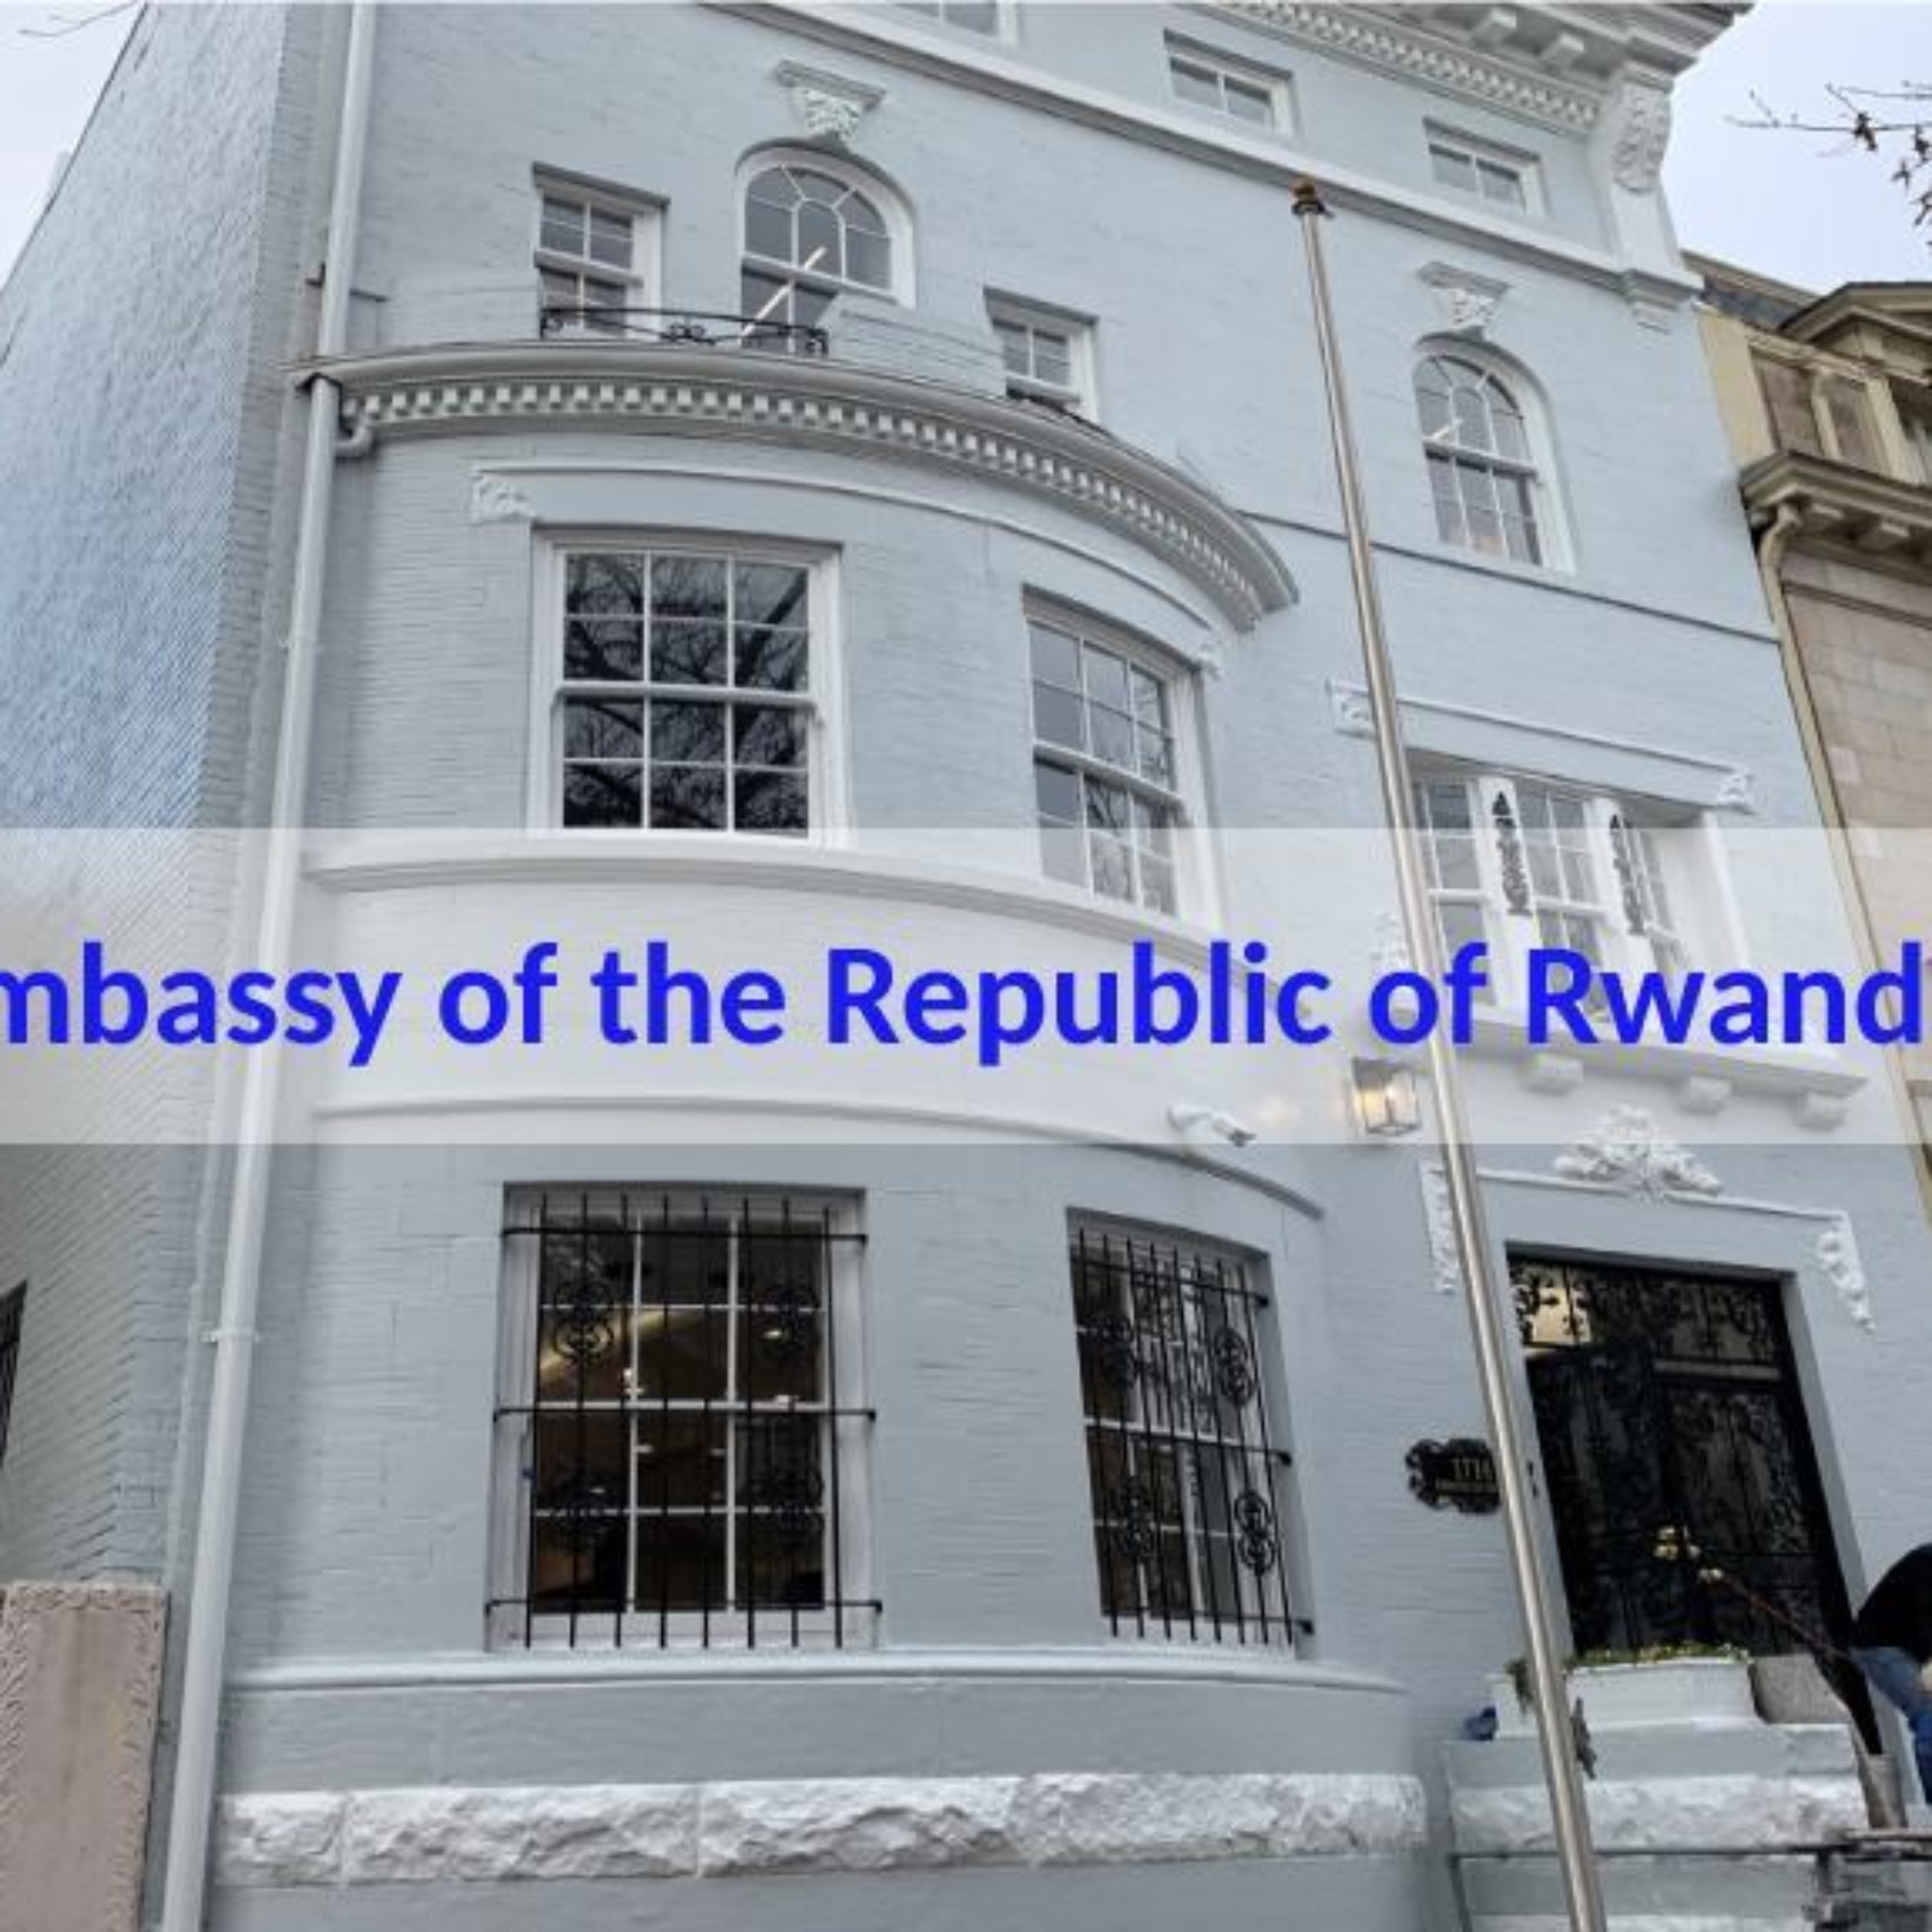 The Embassy of the Republic of Rwanda in Washington DC, USA